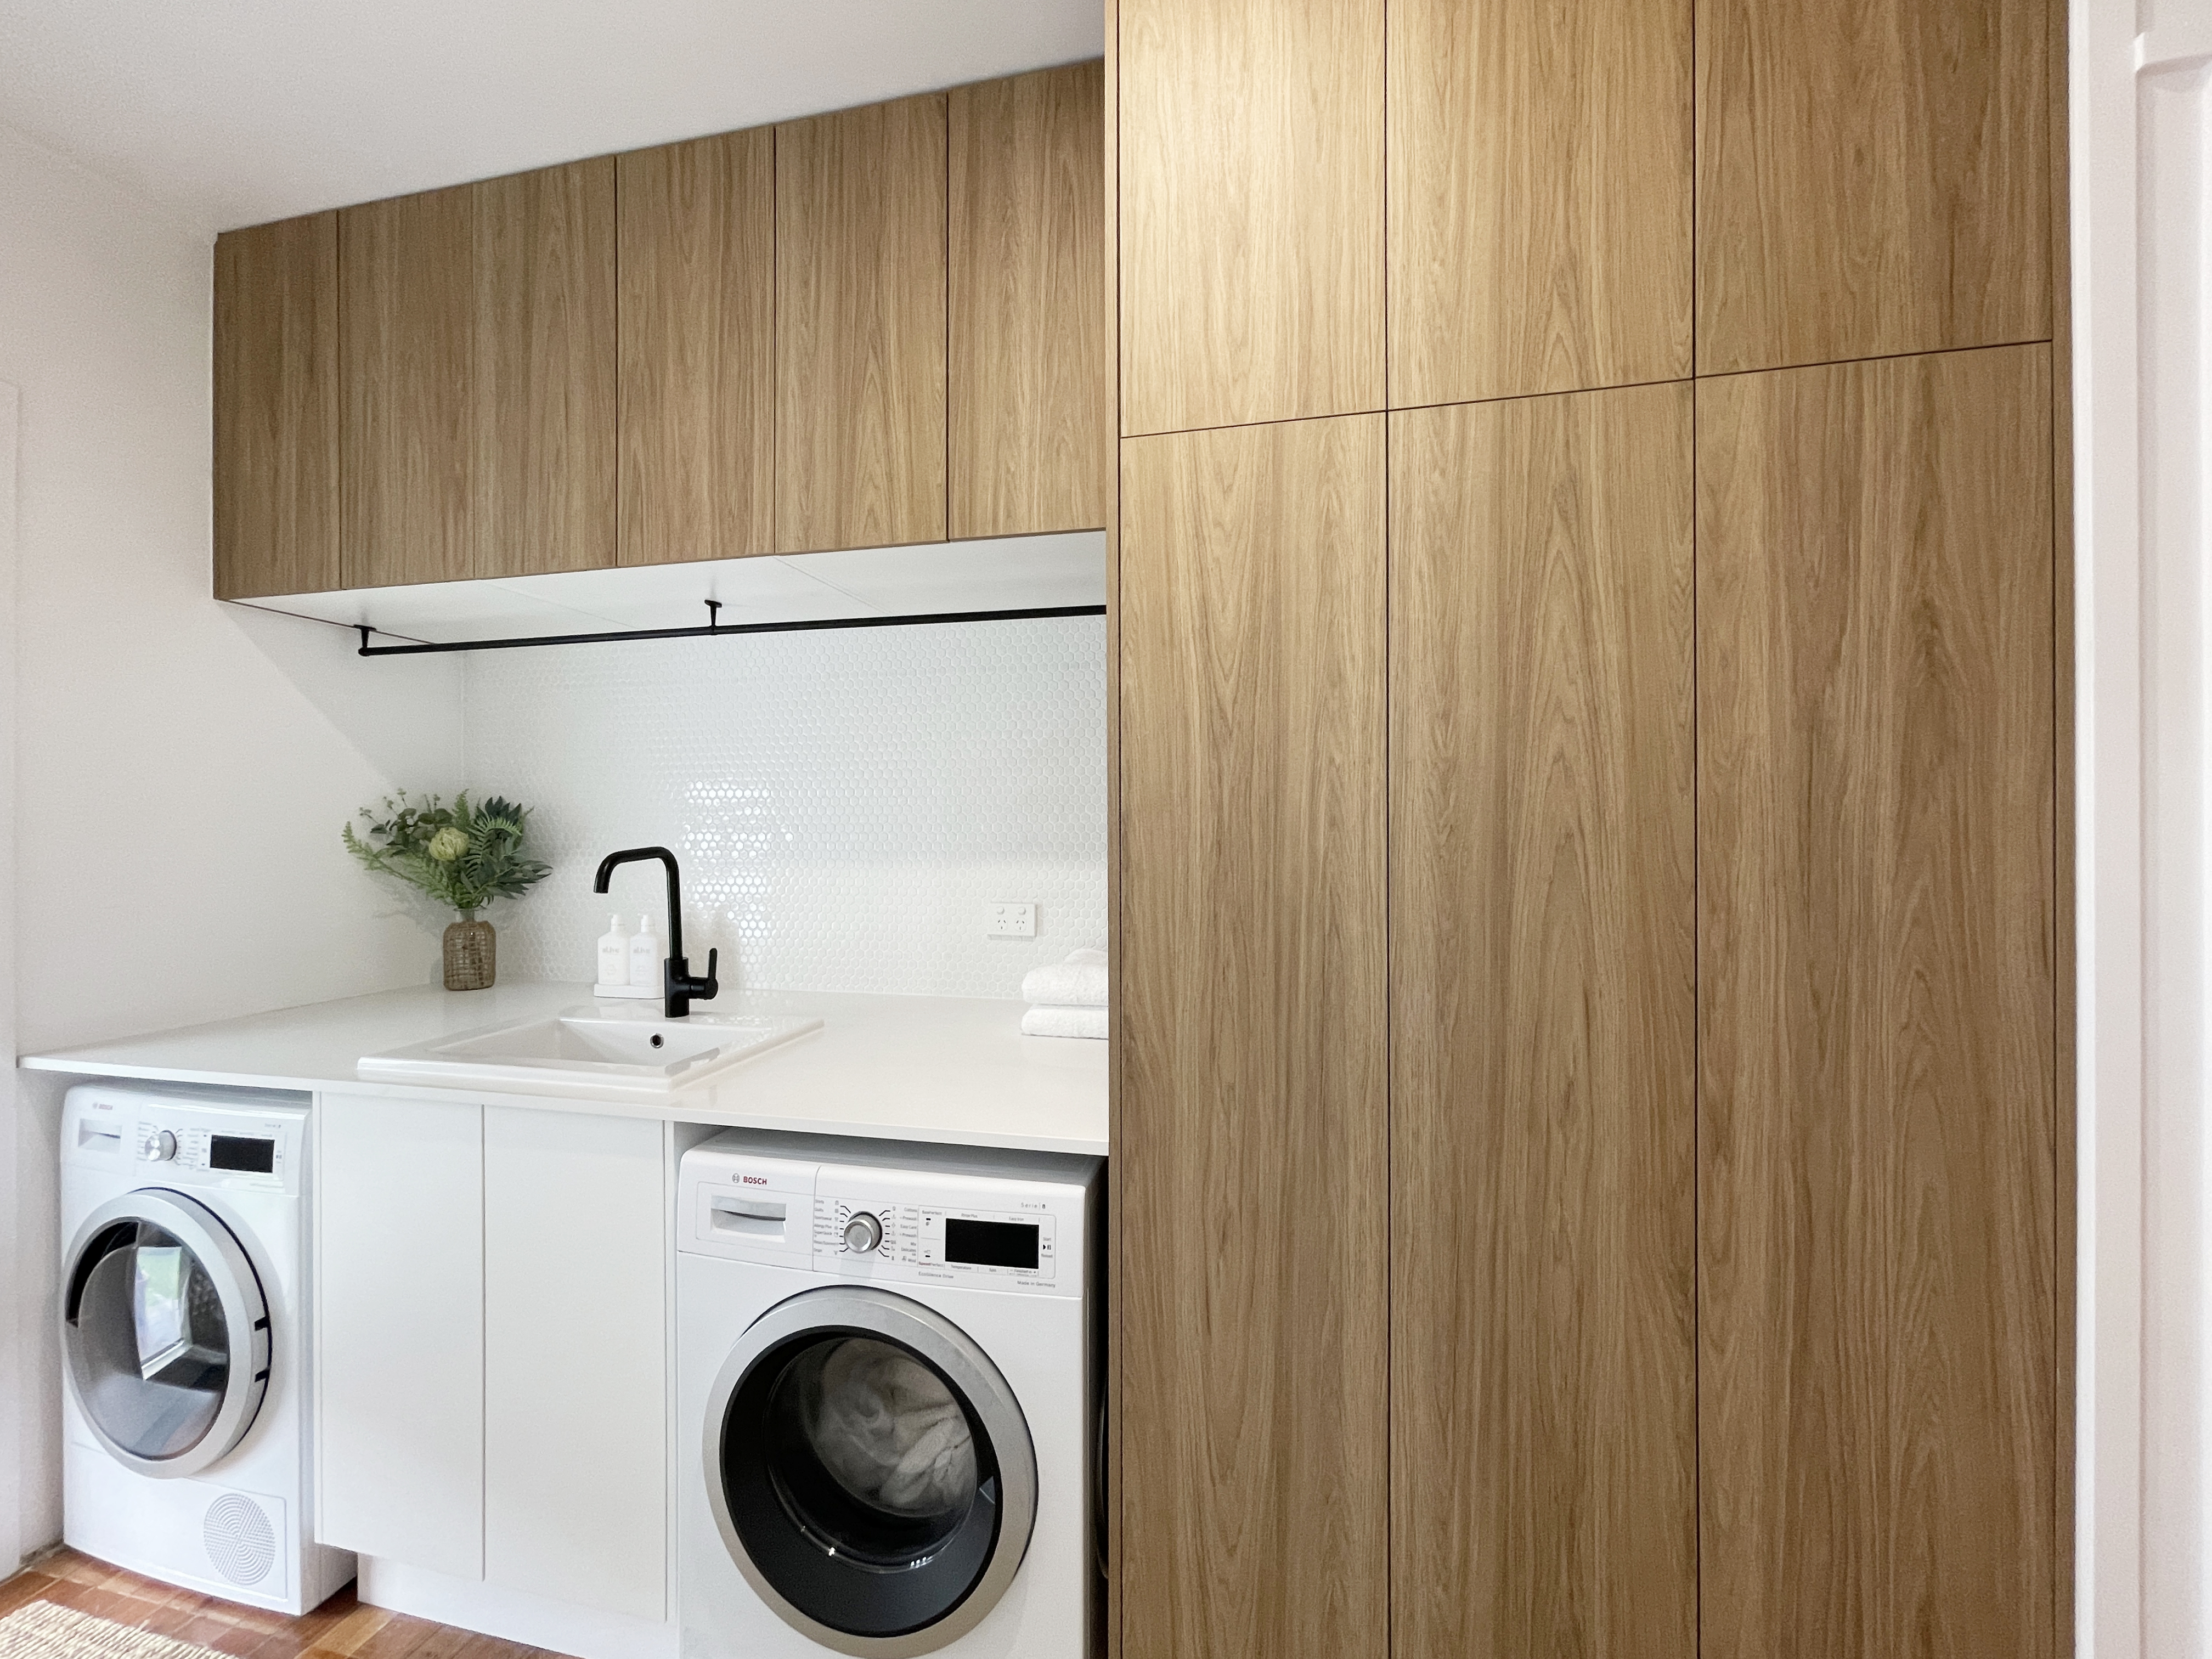 Ultimate laundry linen storage - Floor to ceiling custom woodgrain cabinetry